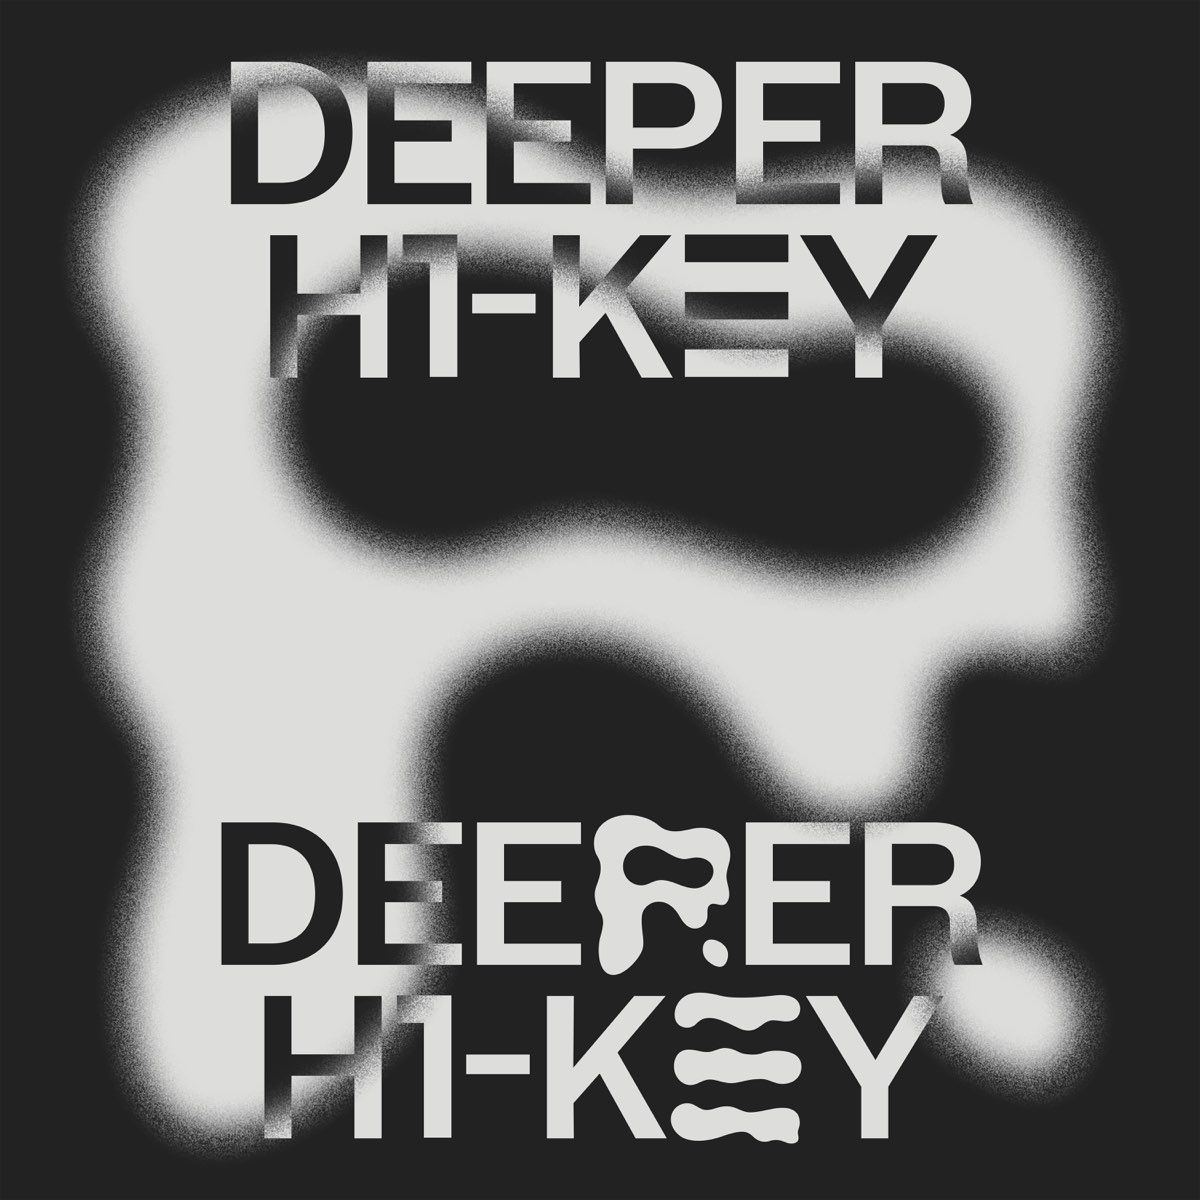 H1-KEY Deeper cover artwork